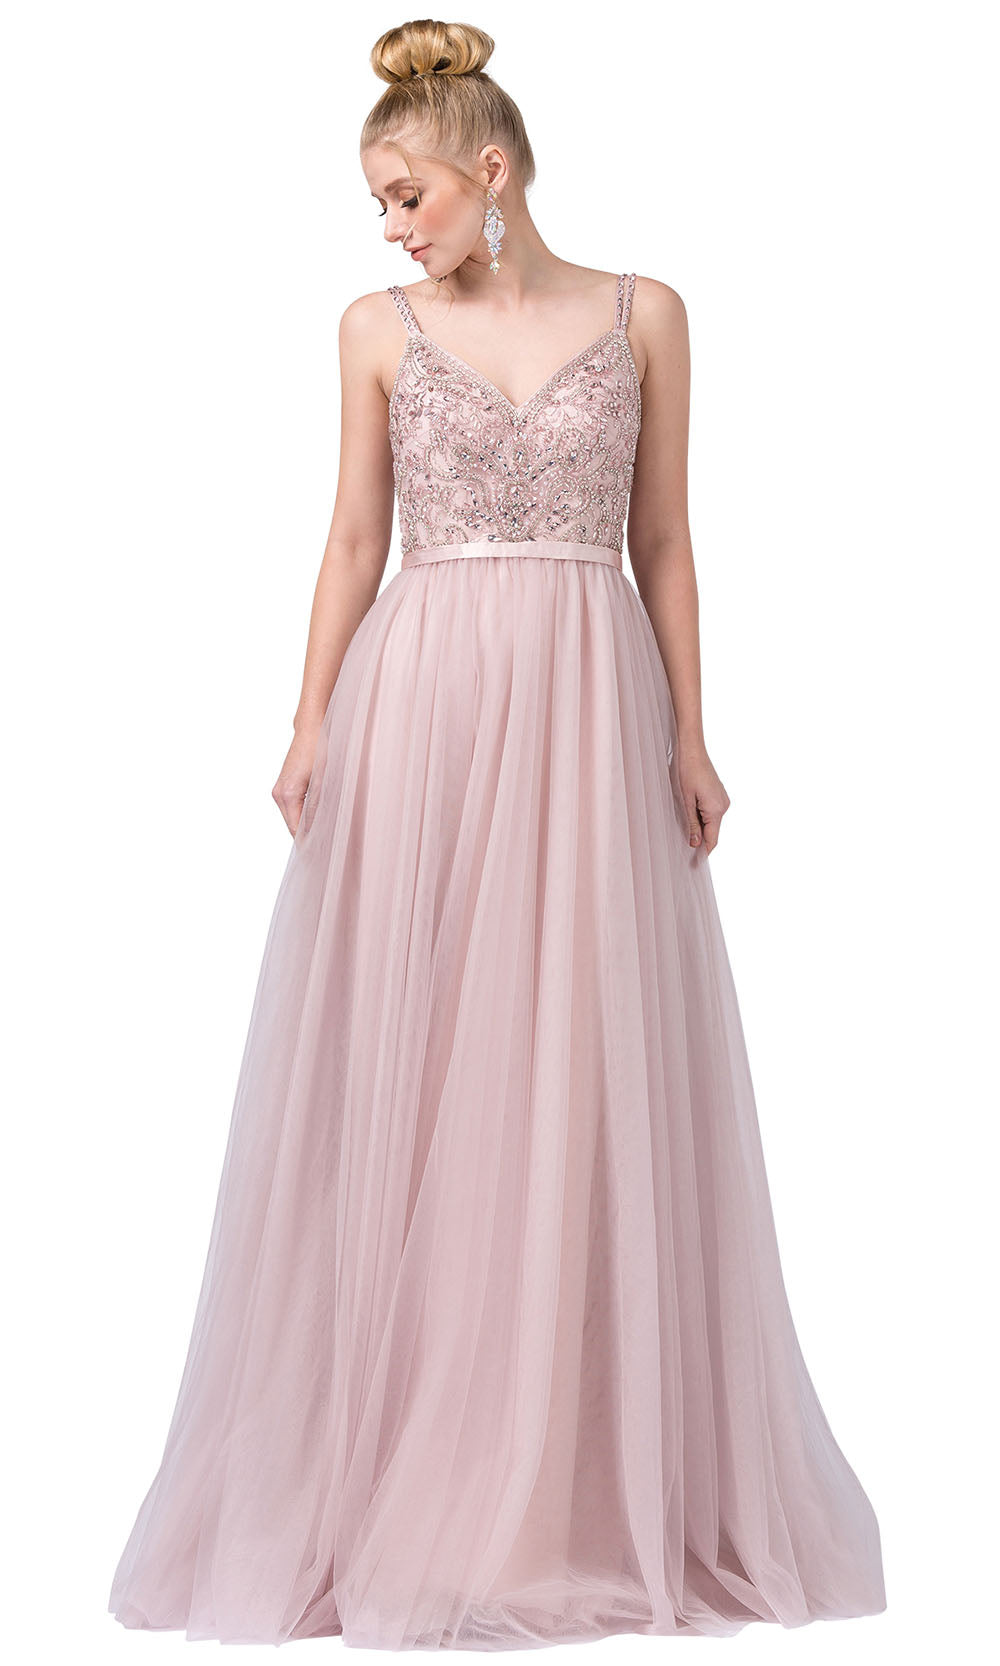 Dancing Queen - 2519 Bead-Embellished A-Line Dress In Pink